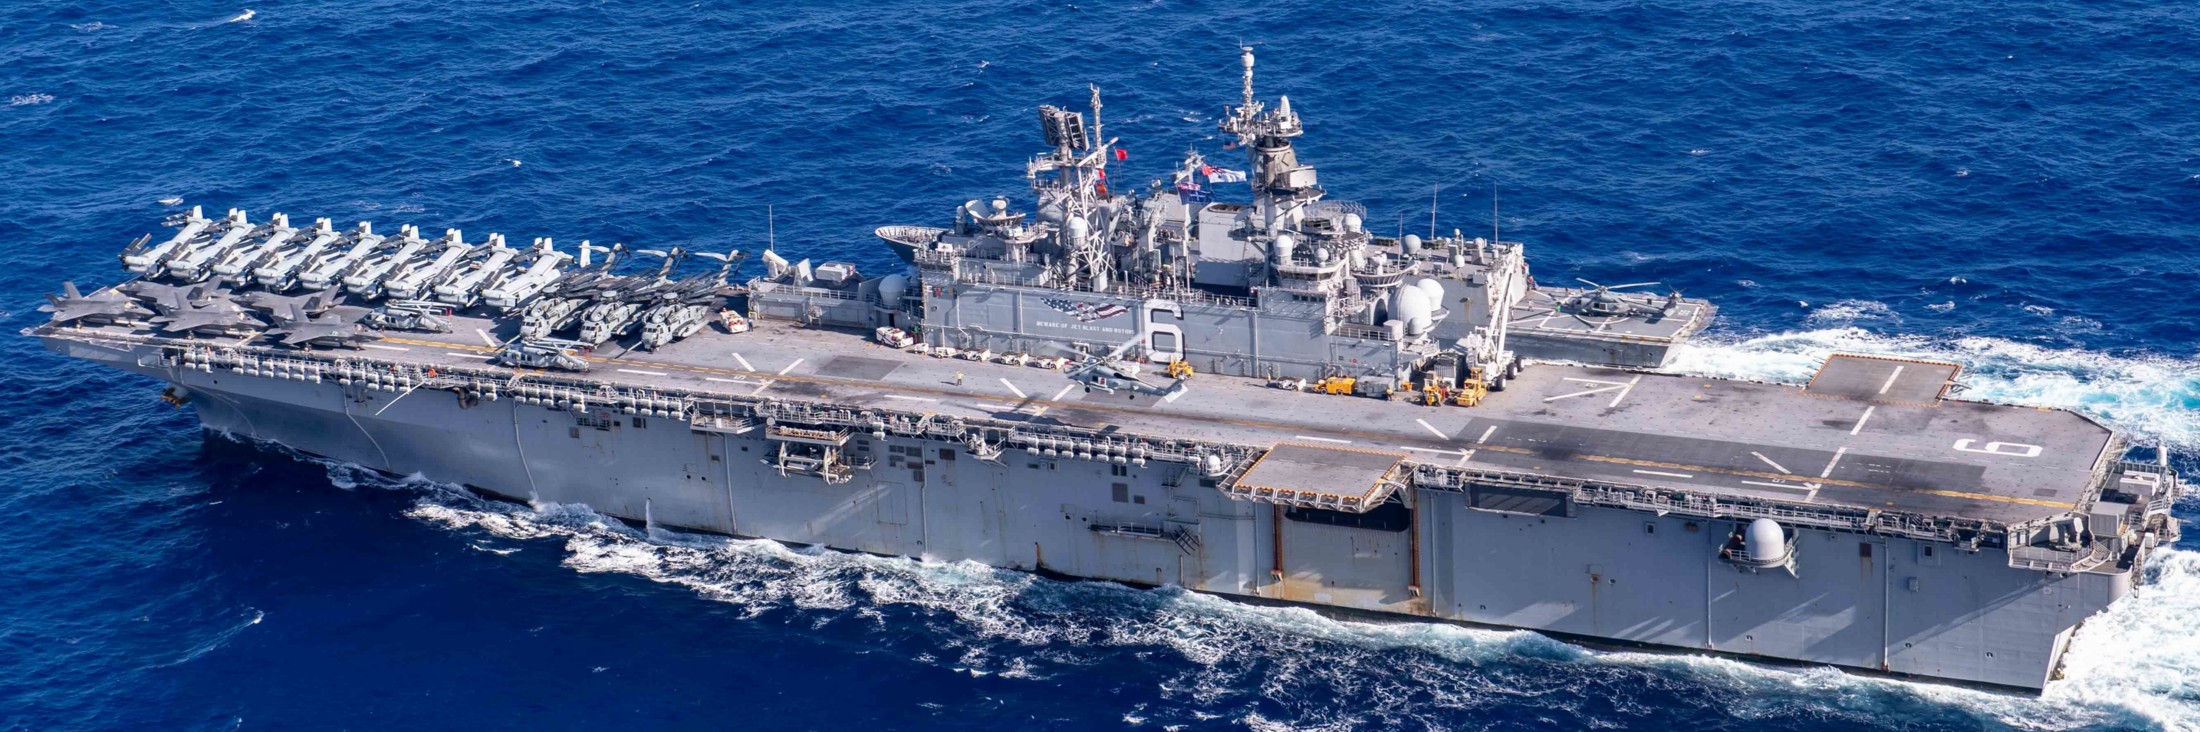 lha-6 uss america amphibious assault ship landing us navy marines vmm-265 talisman sabre coral sea 197